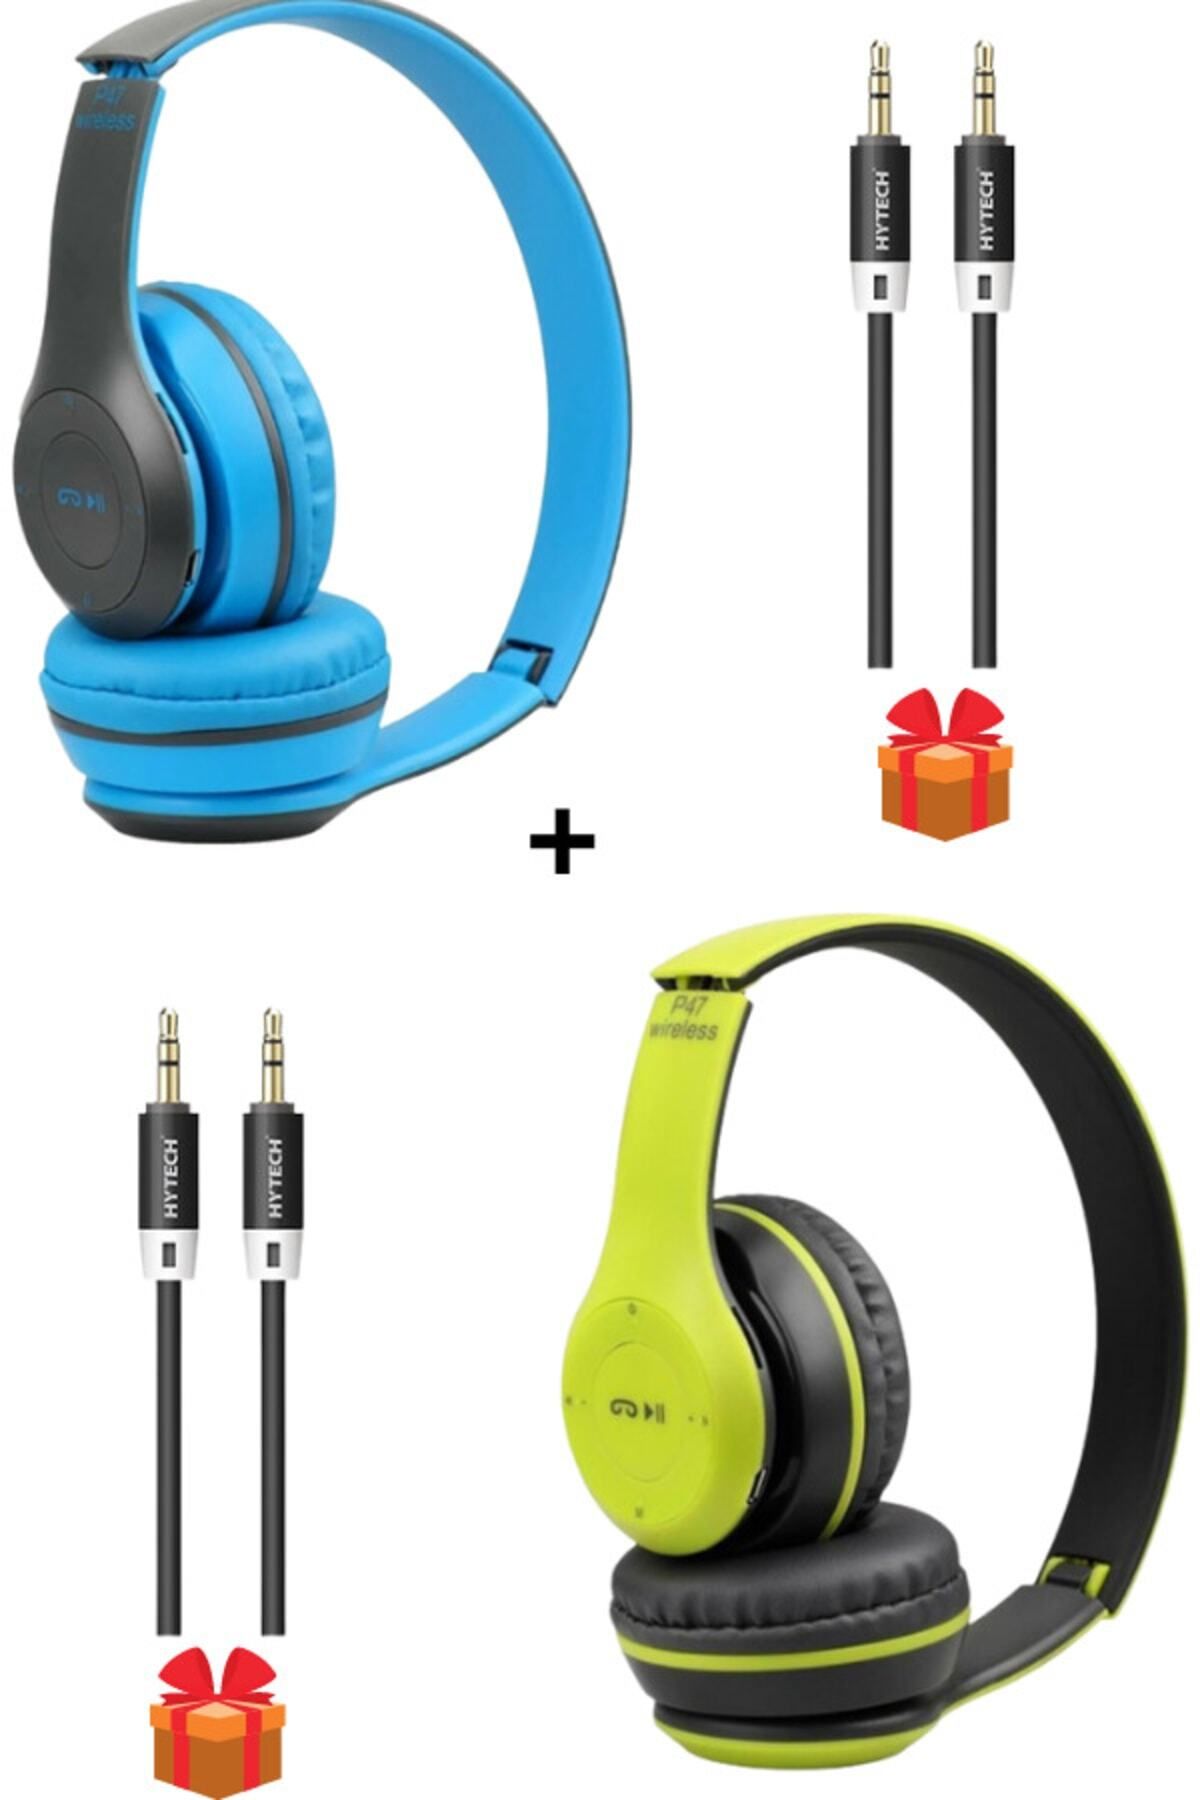 Penguen 2 Adet P47 Wıreless 5.0+edr Bluetooth Kablosuz Kulaklık Mavi+ Yeşil 2 Adet